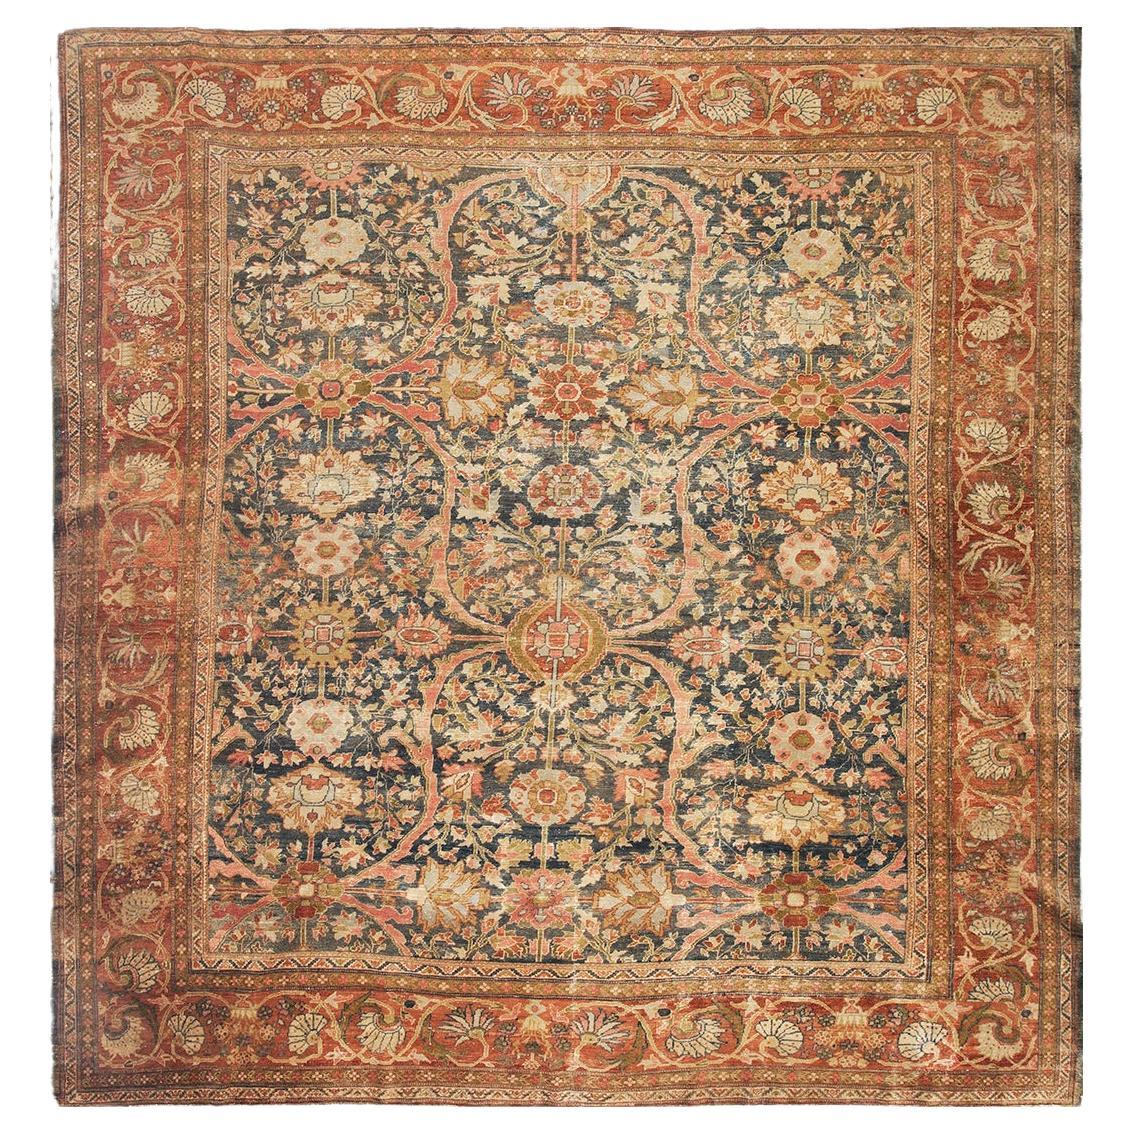 19th Century Persian Sultanabad Carpet ( 9'6" x 10' - 290 x 310 )